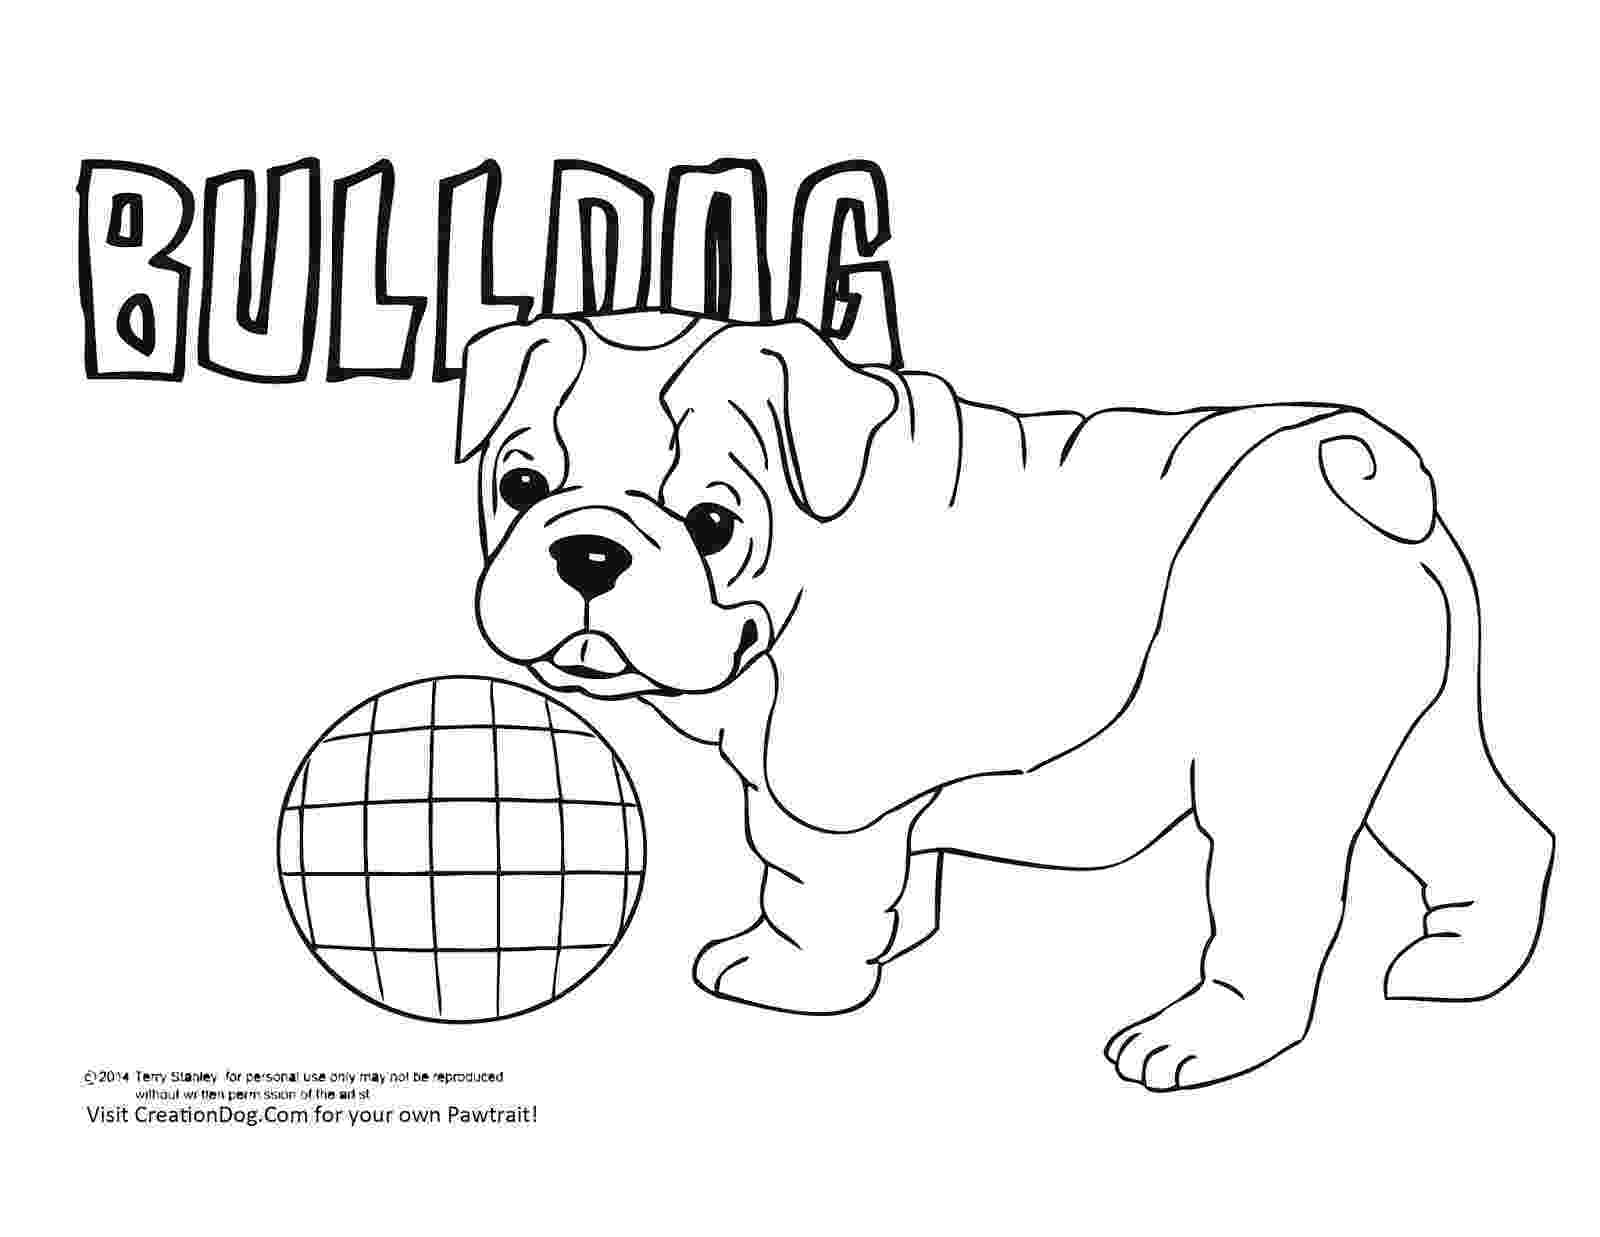 free printable bulldog coloring page french bulldog coloring page free printable coloring pages page coloring bulldog free printable 